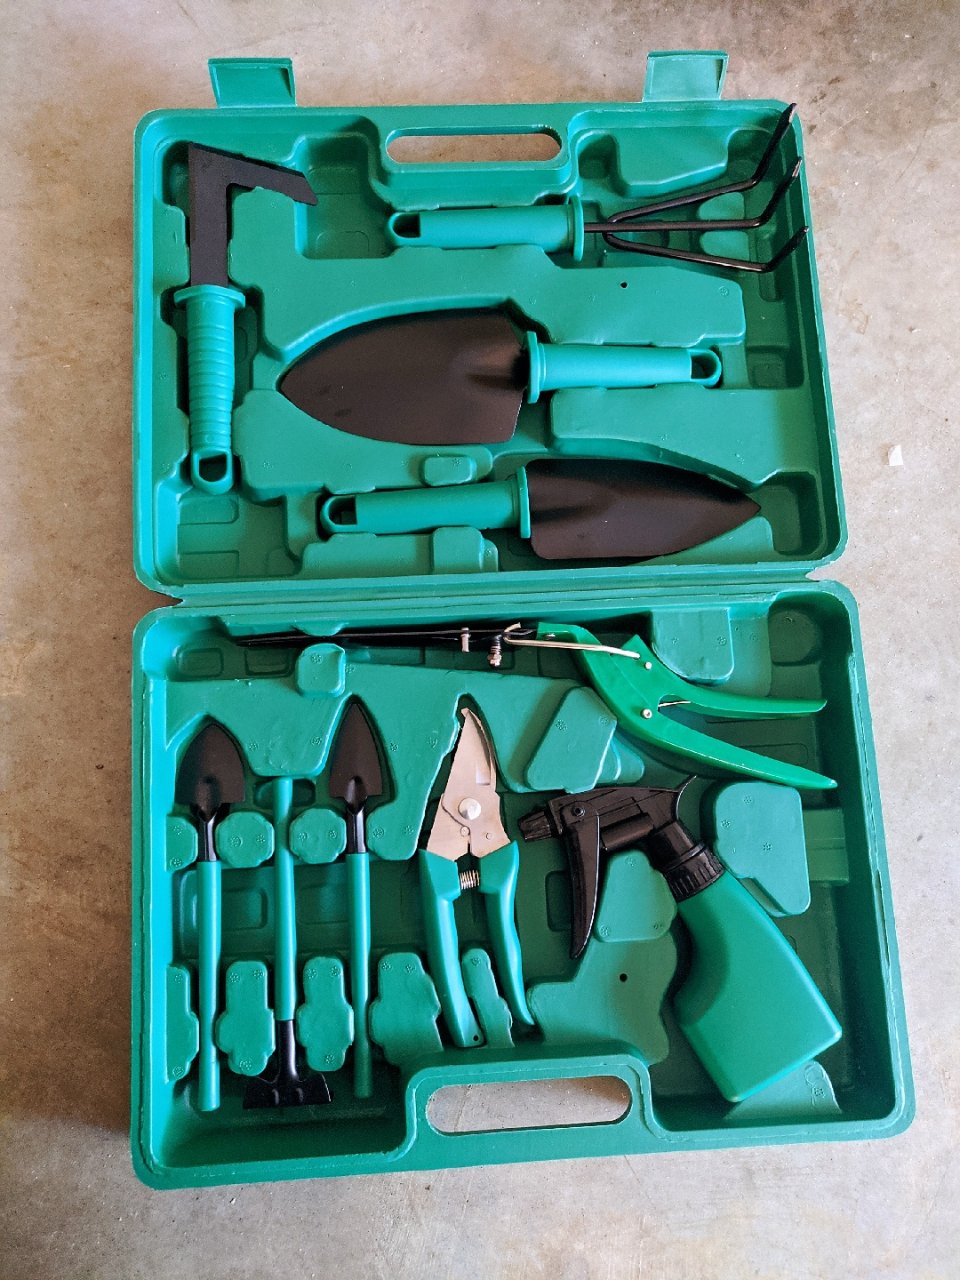 Amazon.com : Royalsellpro Garden Tools Set, 10 Pieces Gardening Tools, Heavy Duty Gardening Kits with Carrying Case, Anti-Rust Ergonomic Handle, Gardening Gifts for Female, Men, Gardeners : Garden & Outdoor